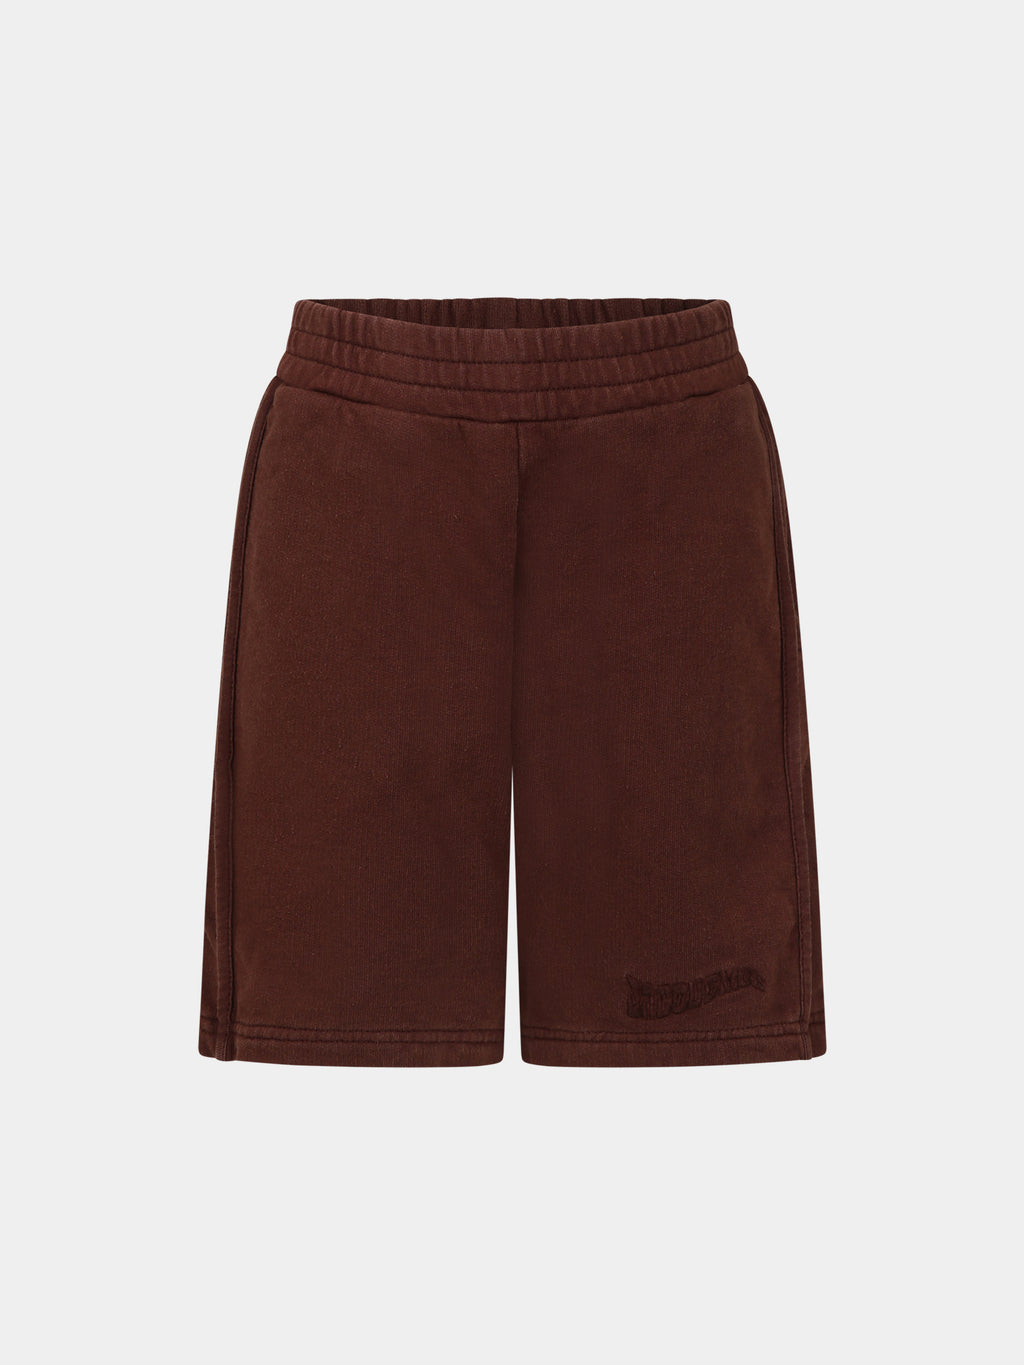 Brown 'Le Short Camargue' shorts for kids